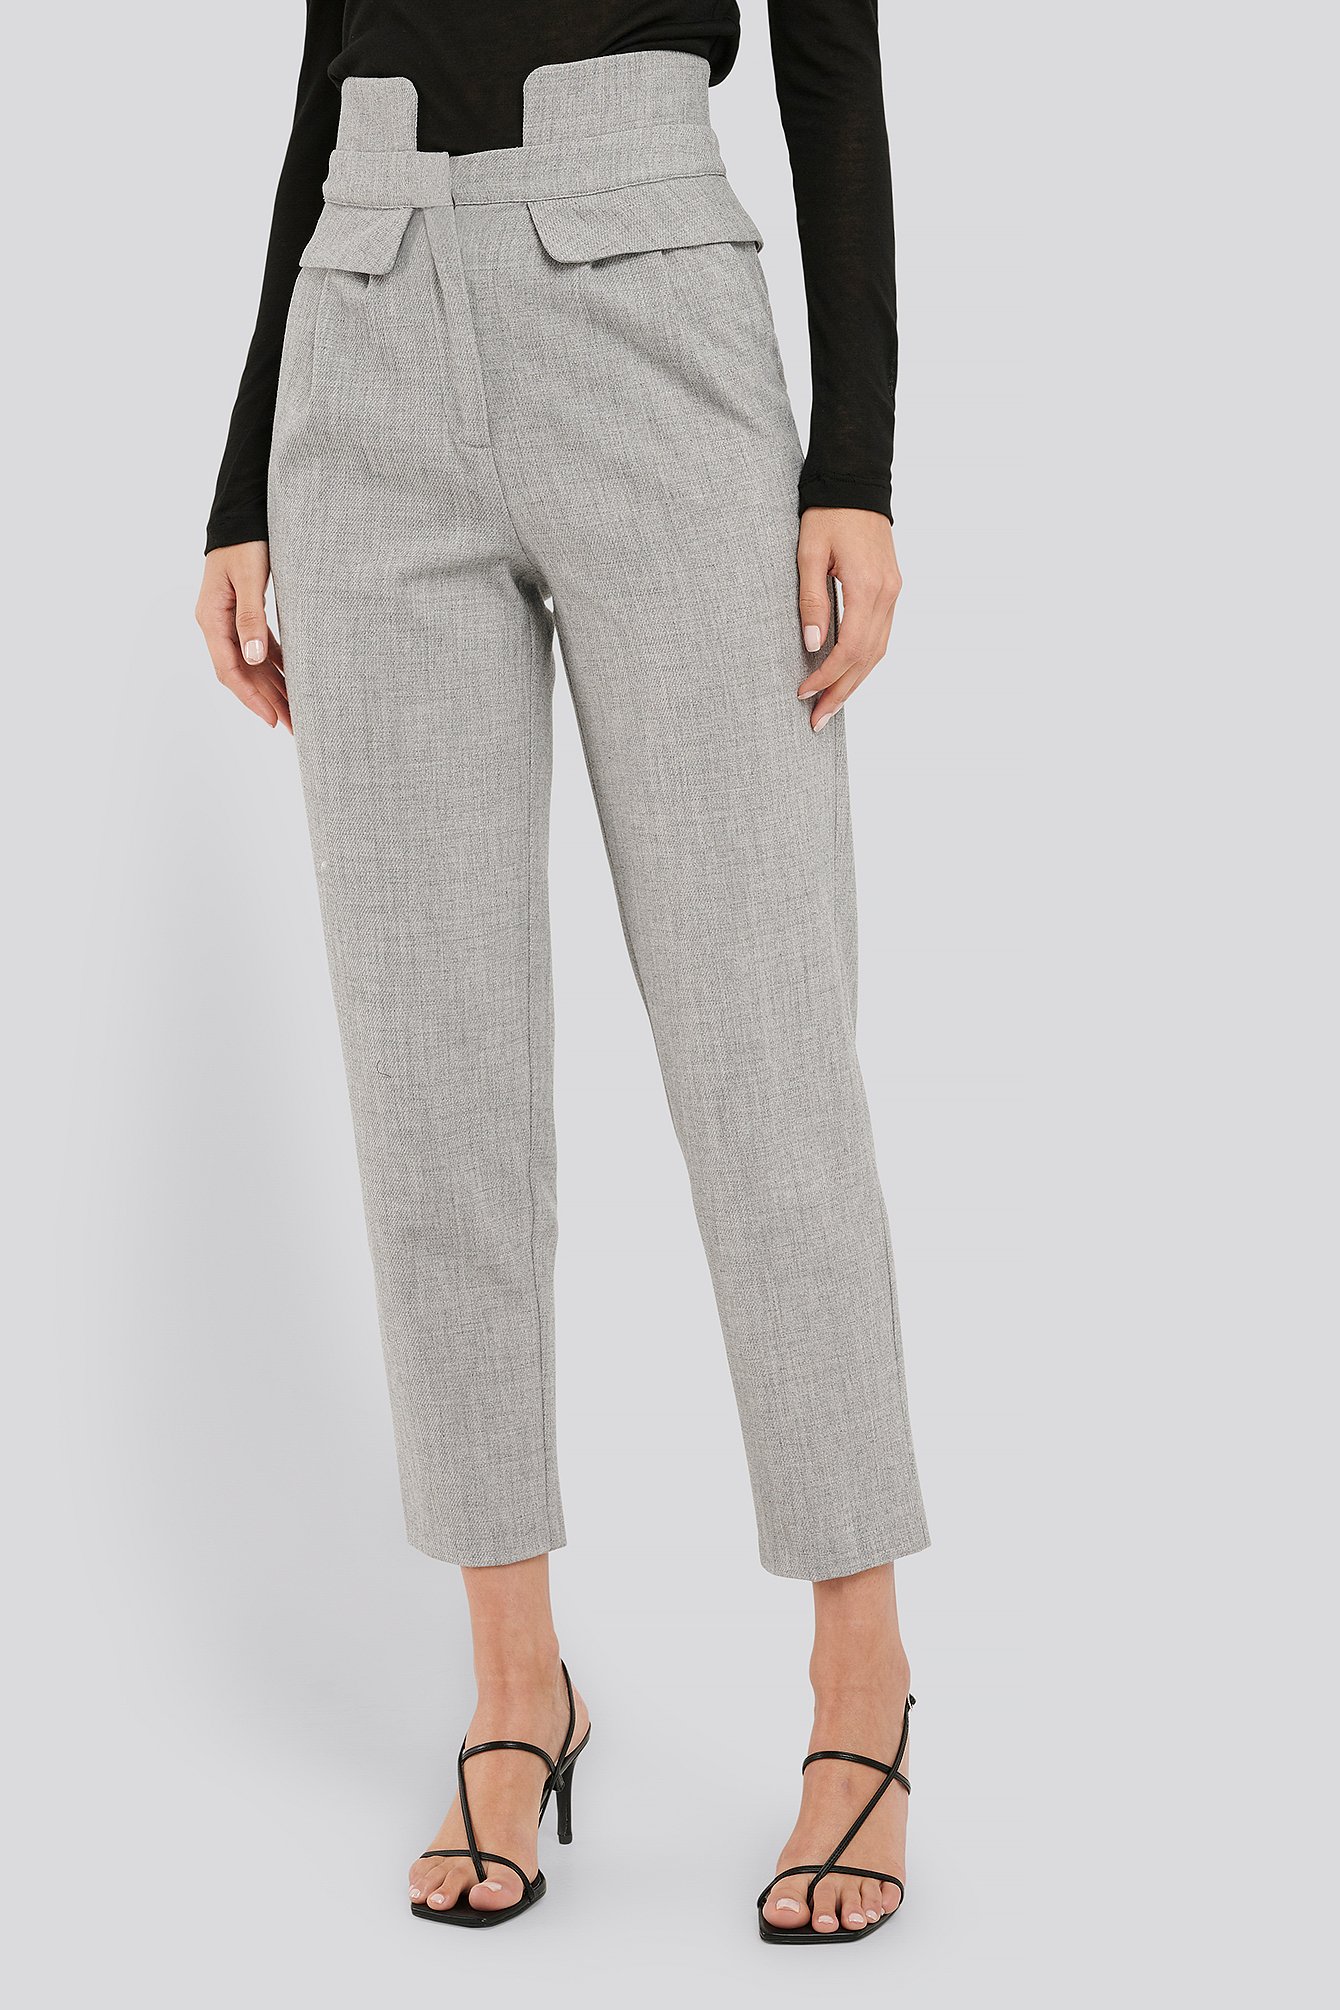 Grey High Waist Detailed Pants